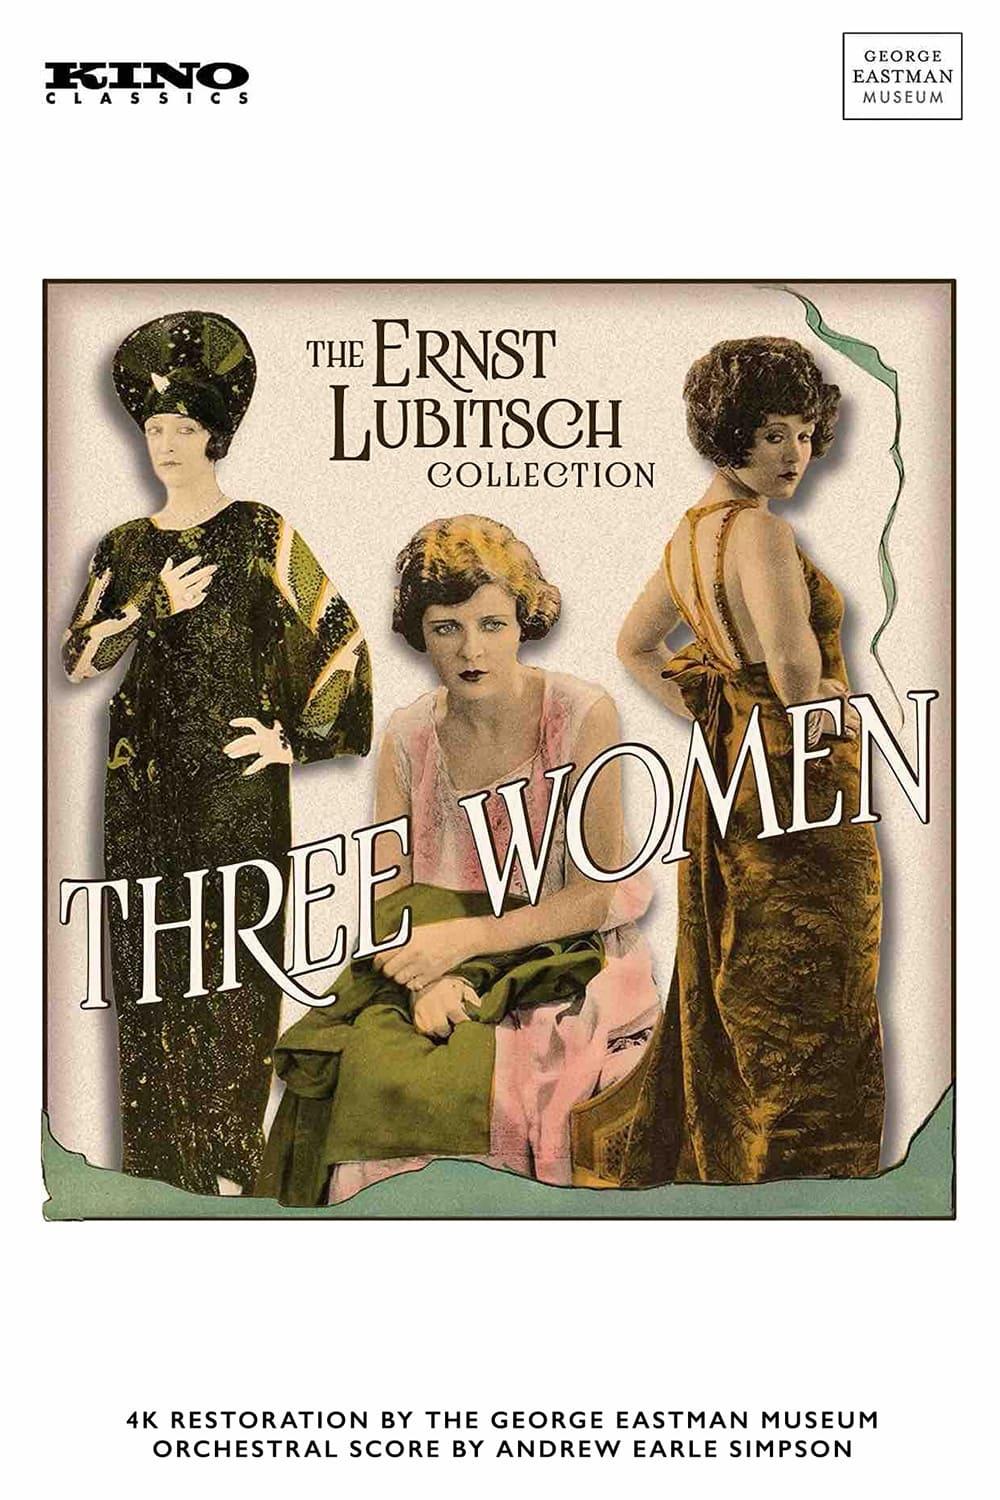 Three Women poster